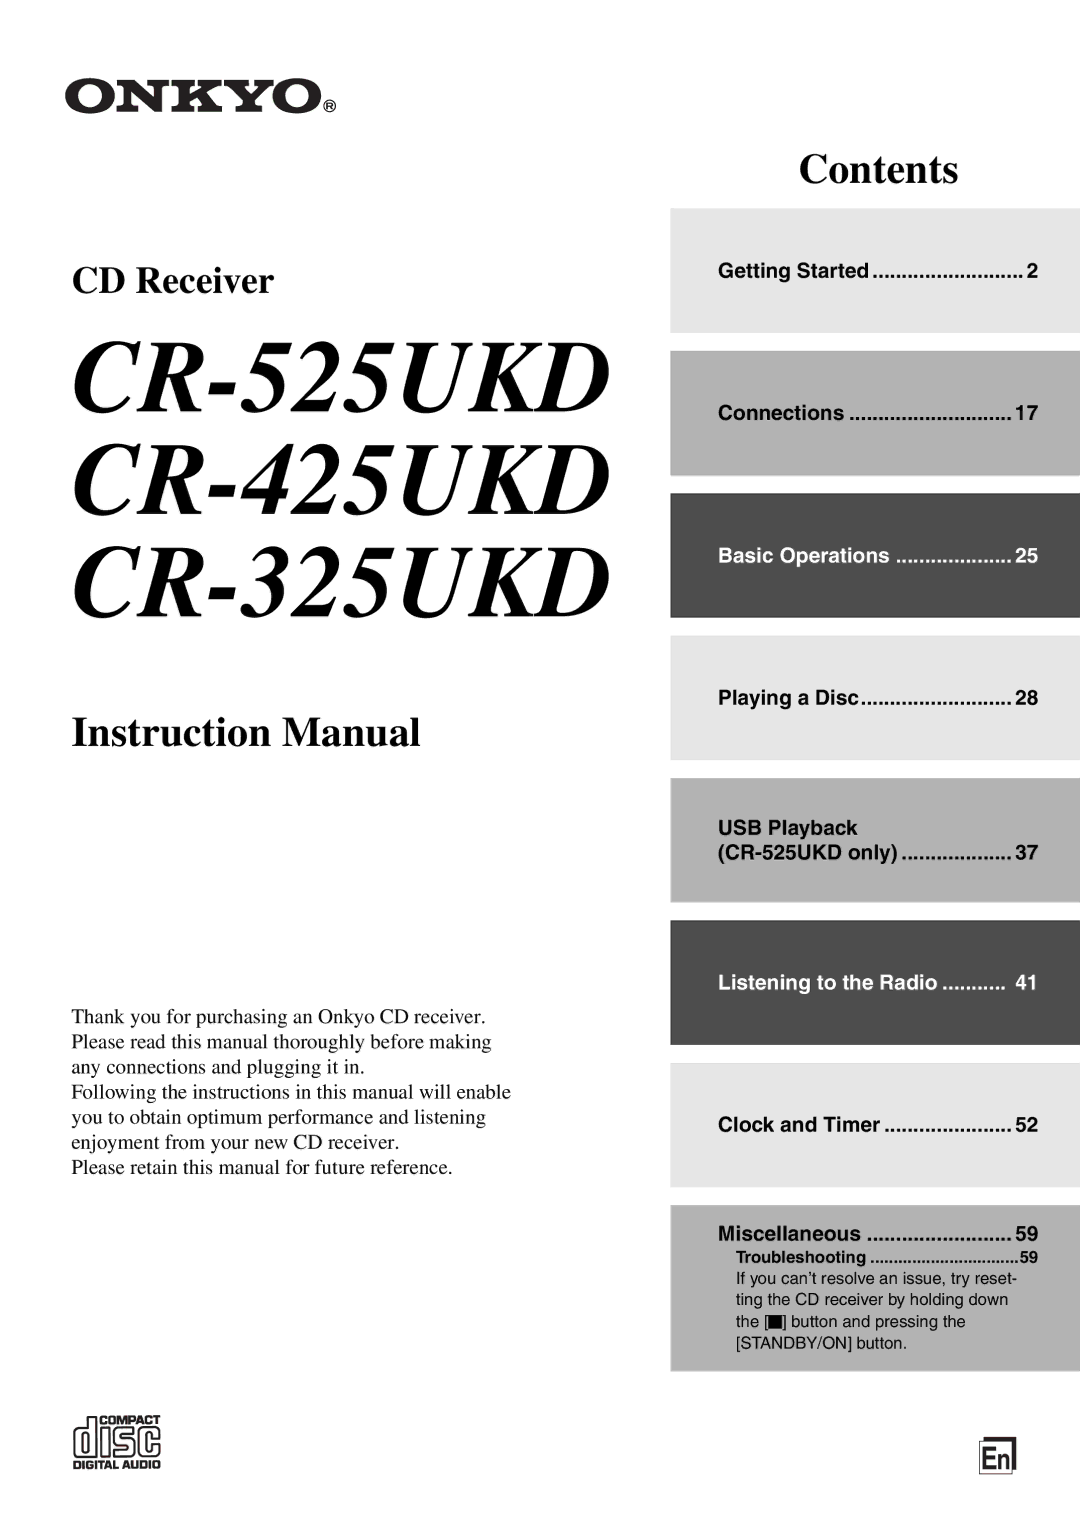 Onkyo instruction manual CR-525UKD CR-425UKD CR-325UKD 